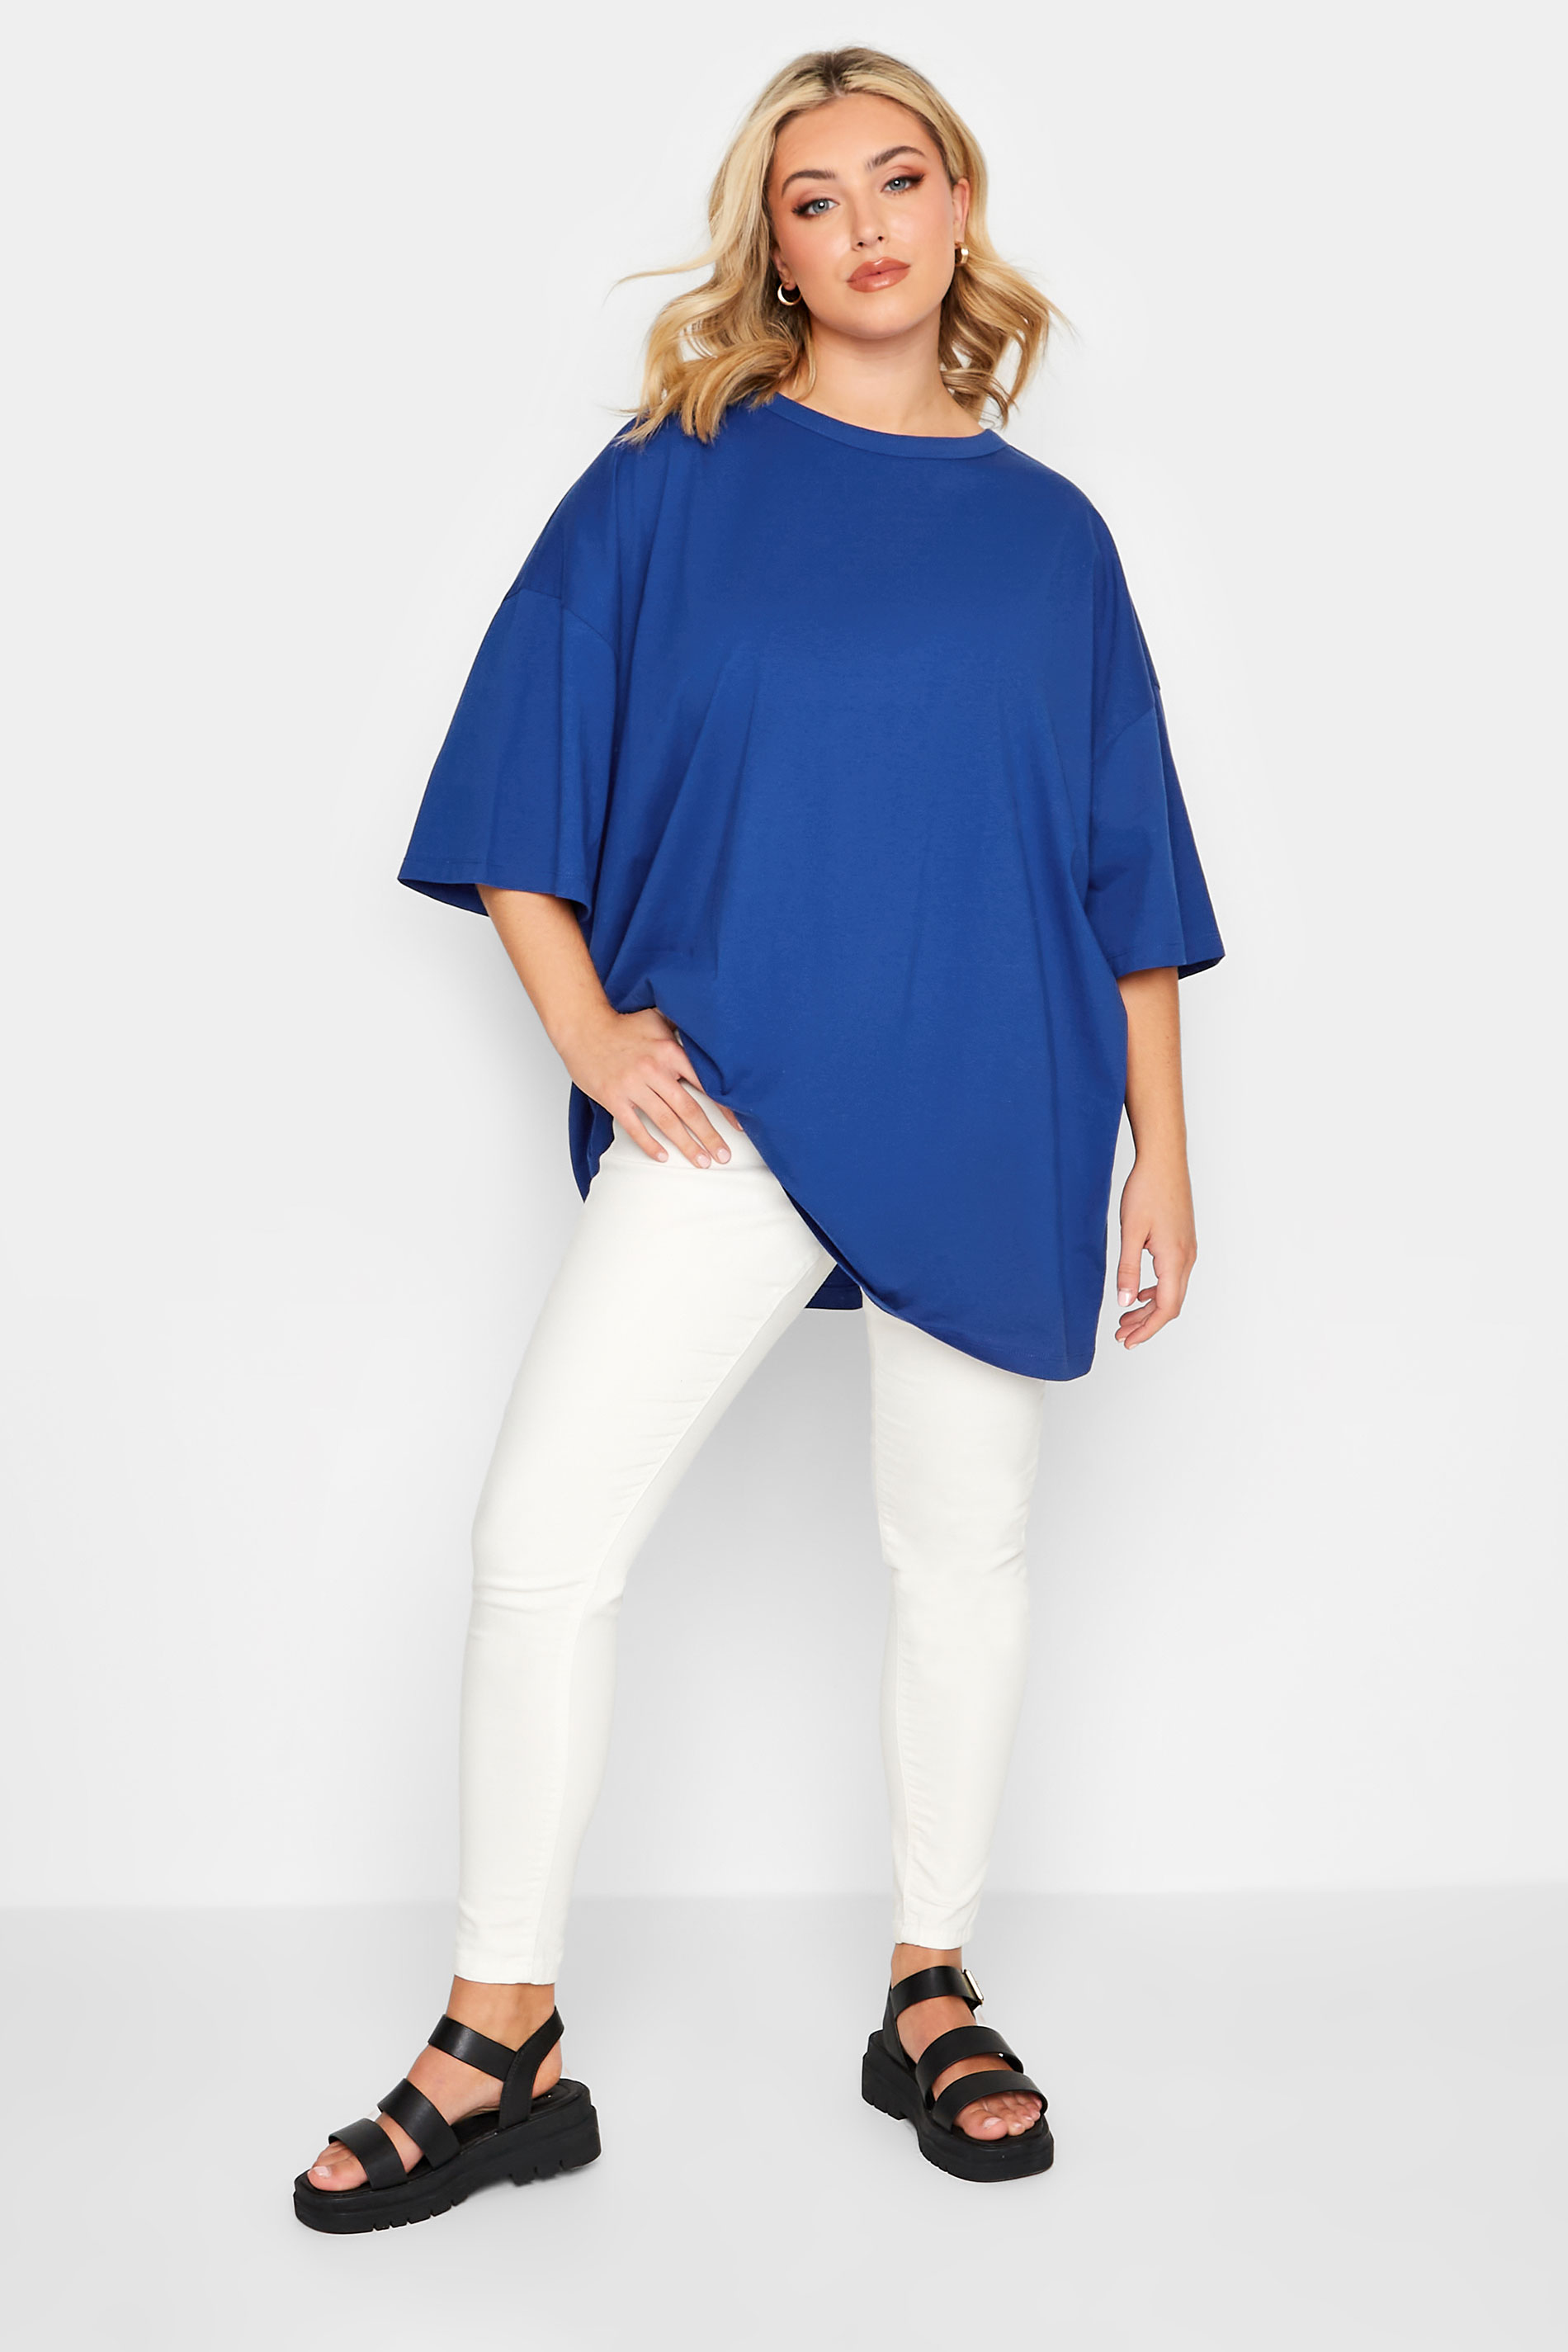 YOURS Plus Size Cobalt Blue Oversized Boxy T-Shirt | Yours Clothing 2